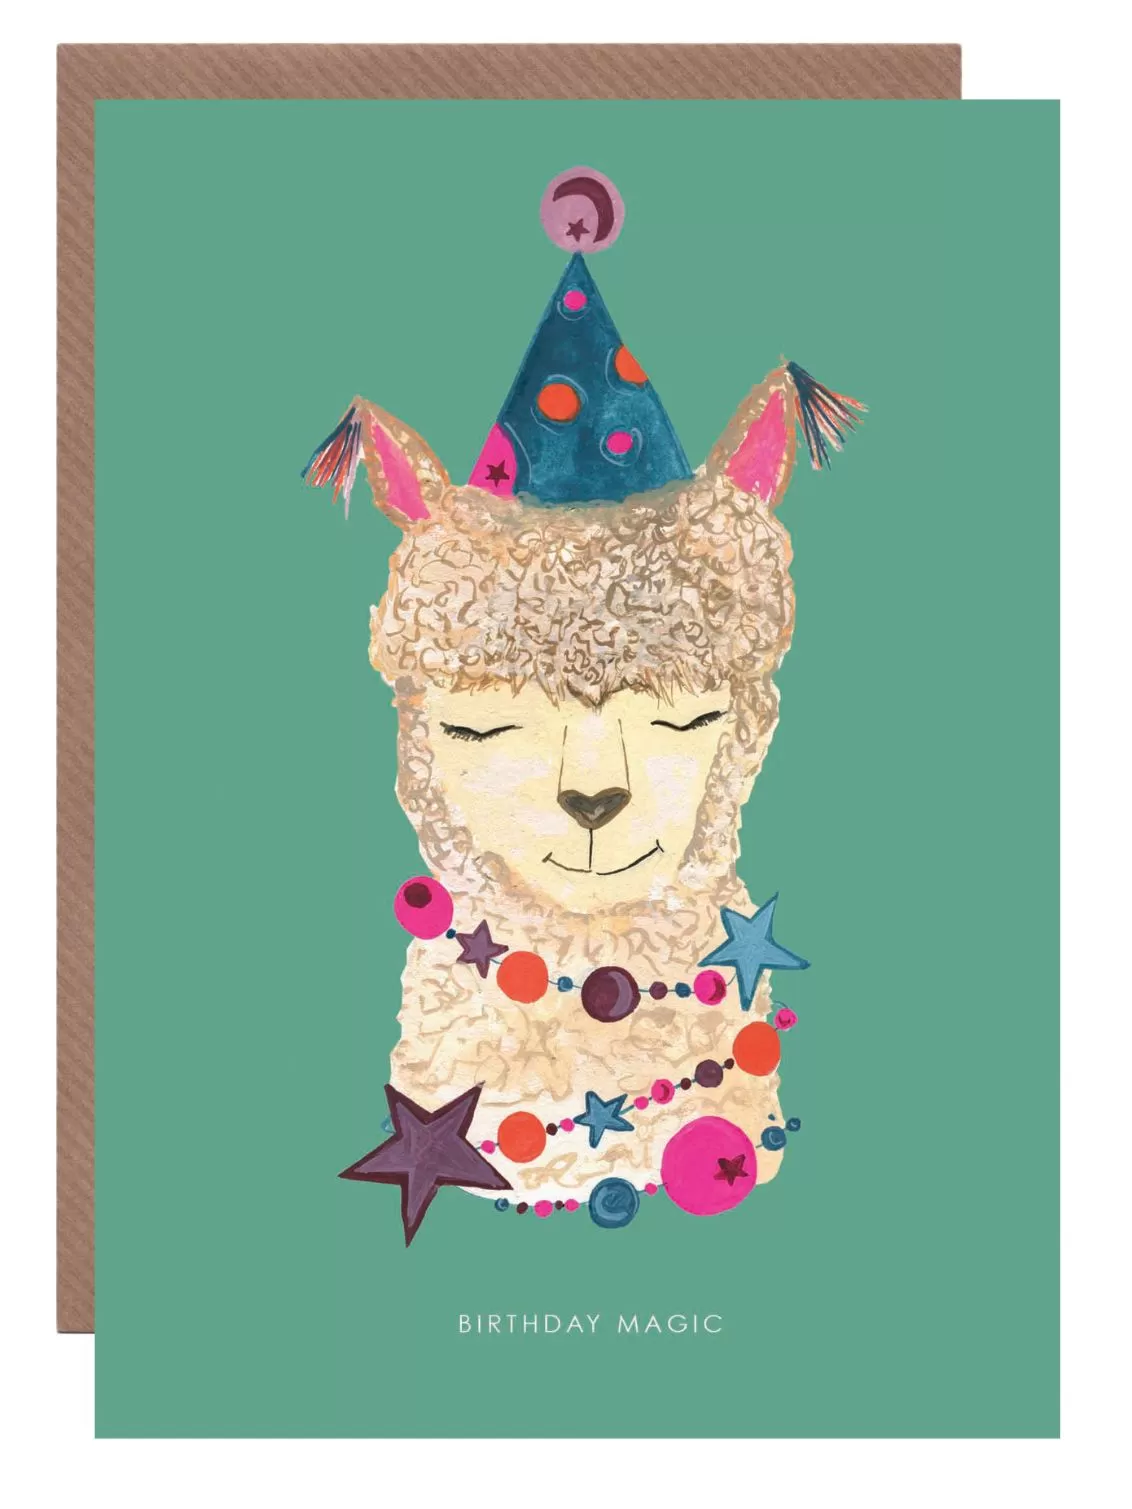 Image of the magic alpaca on the card.